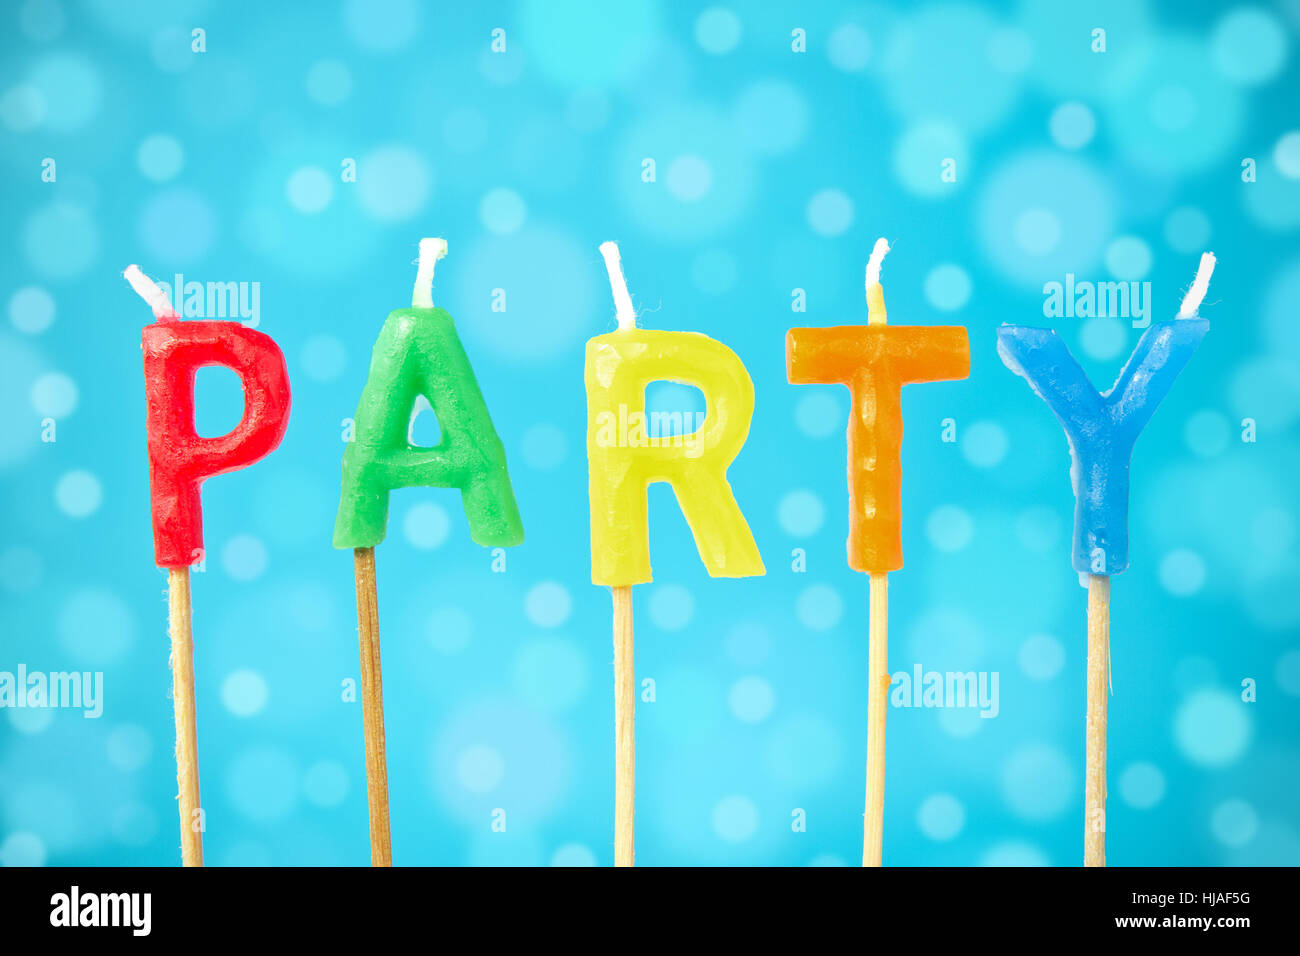 feiern, schwelgen, schwelgt, feiert, Kerze, Wort, Party, Feier, Stockfoto